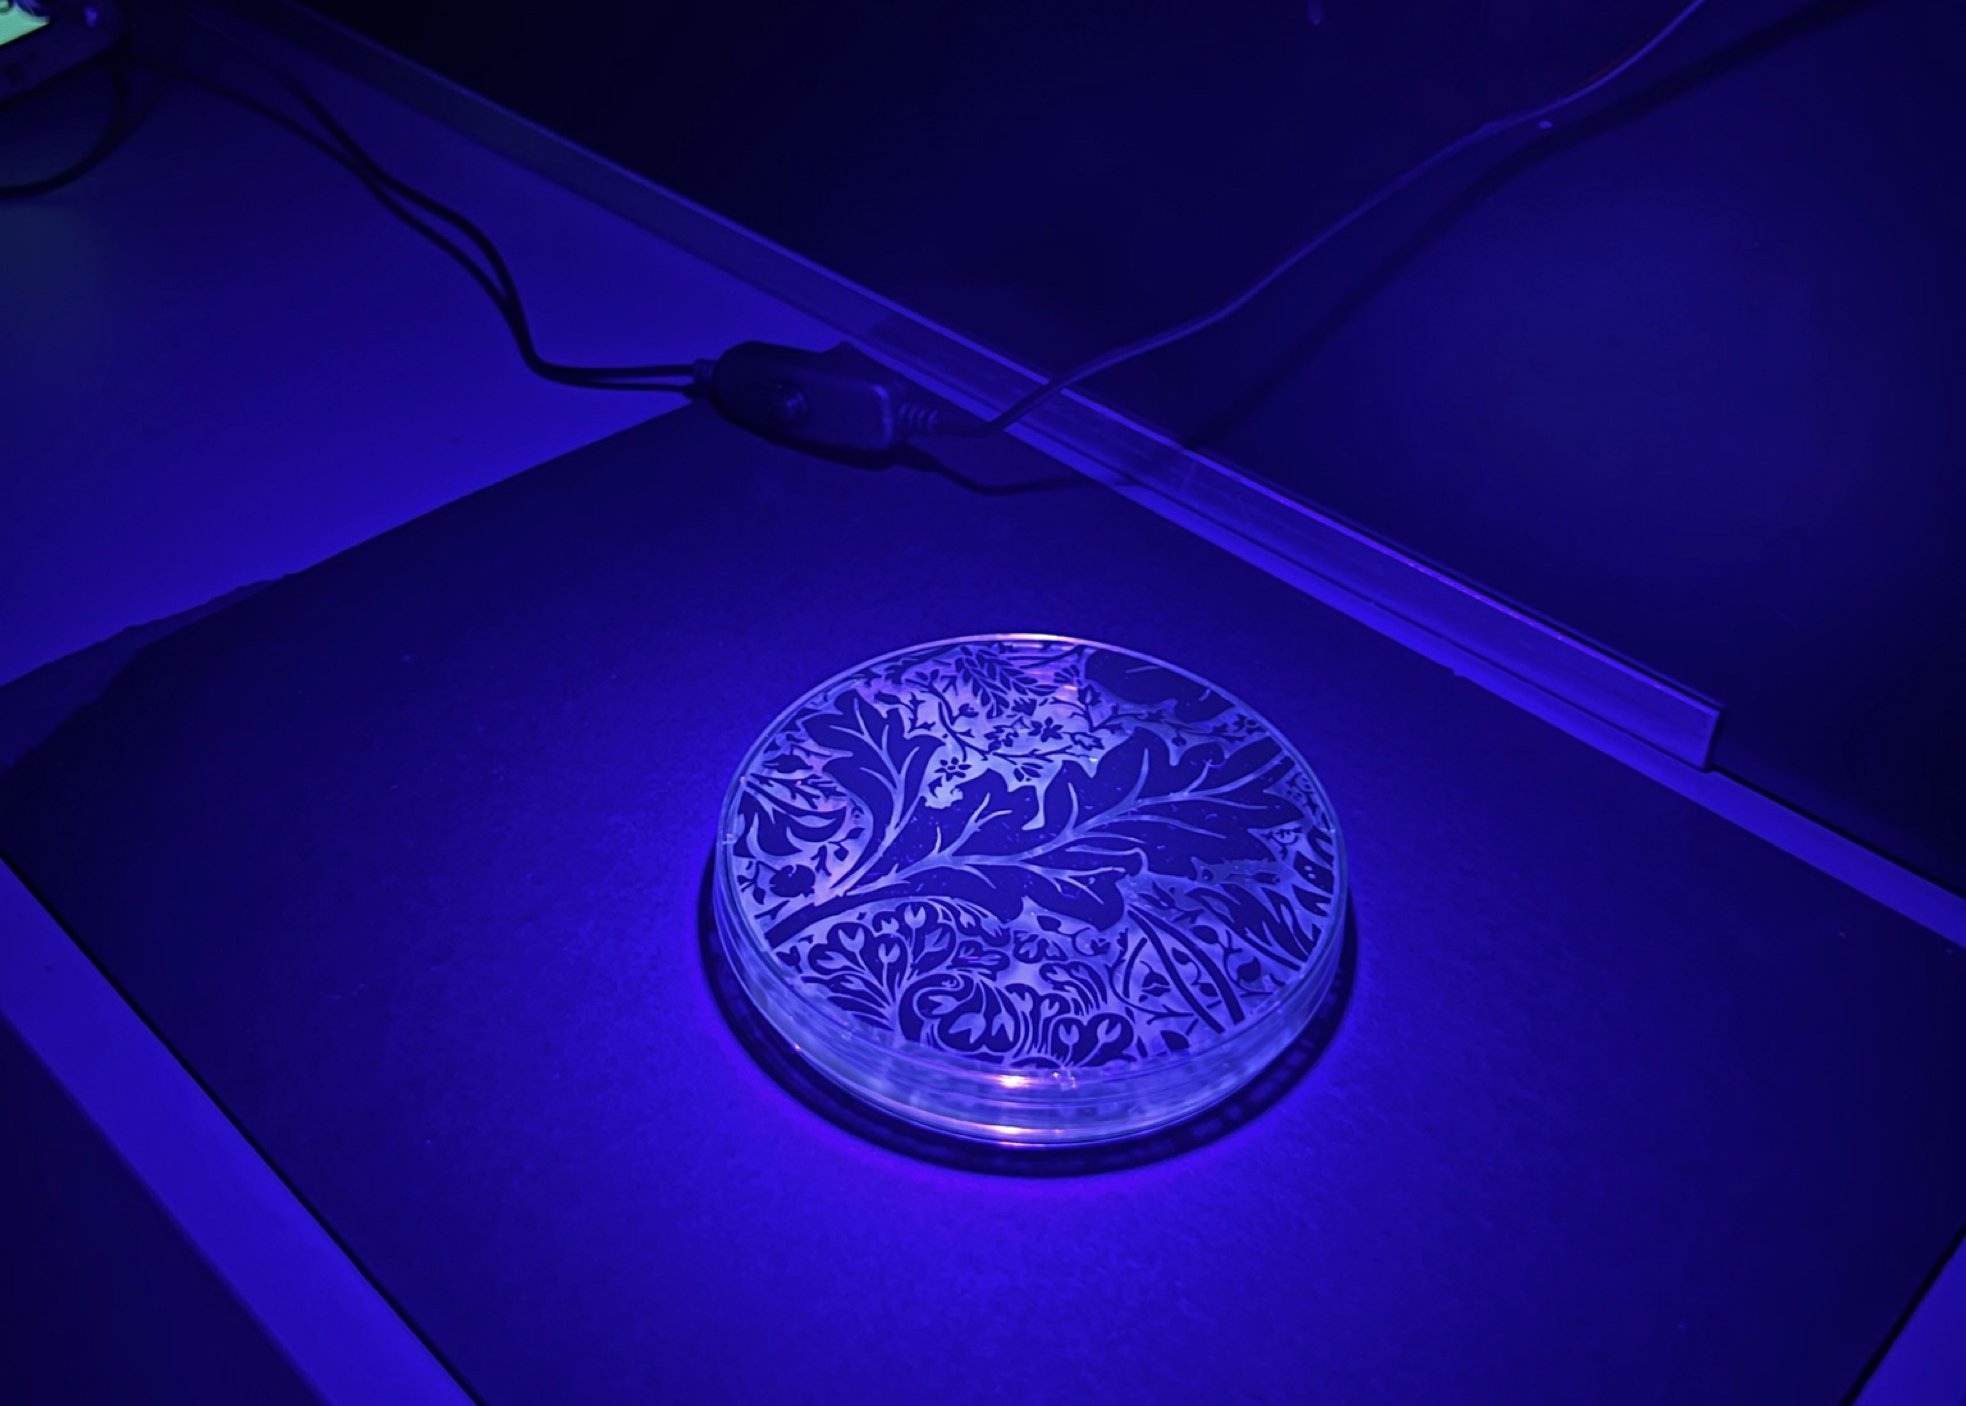 6-UV-test-print-penlight-and-3inch-petri-dish-design-by-William-Morris.jpg